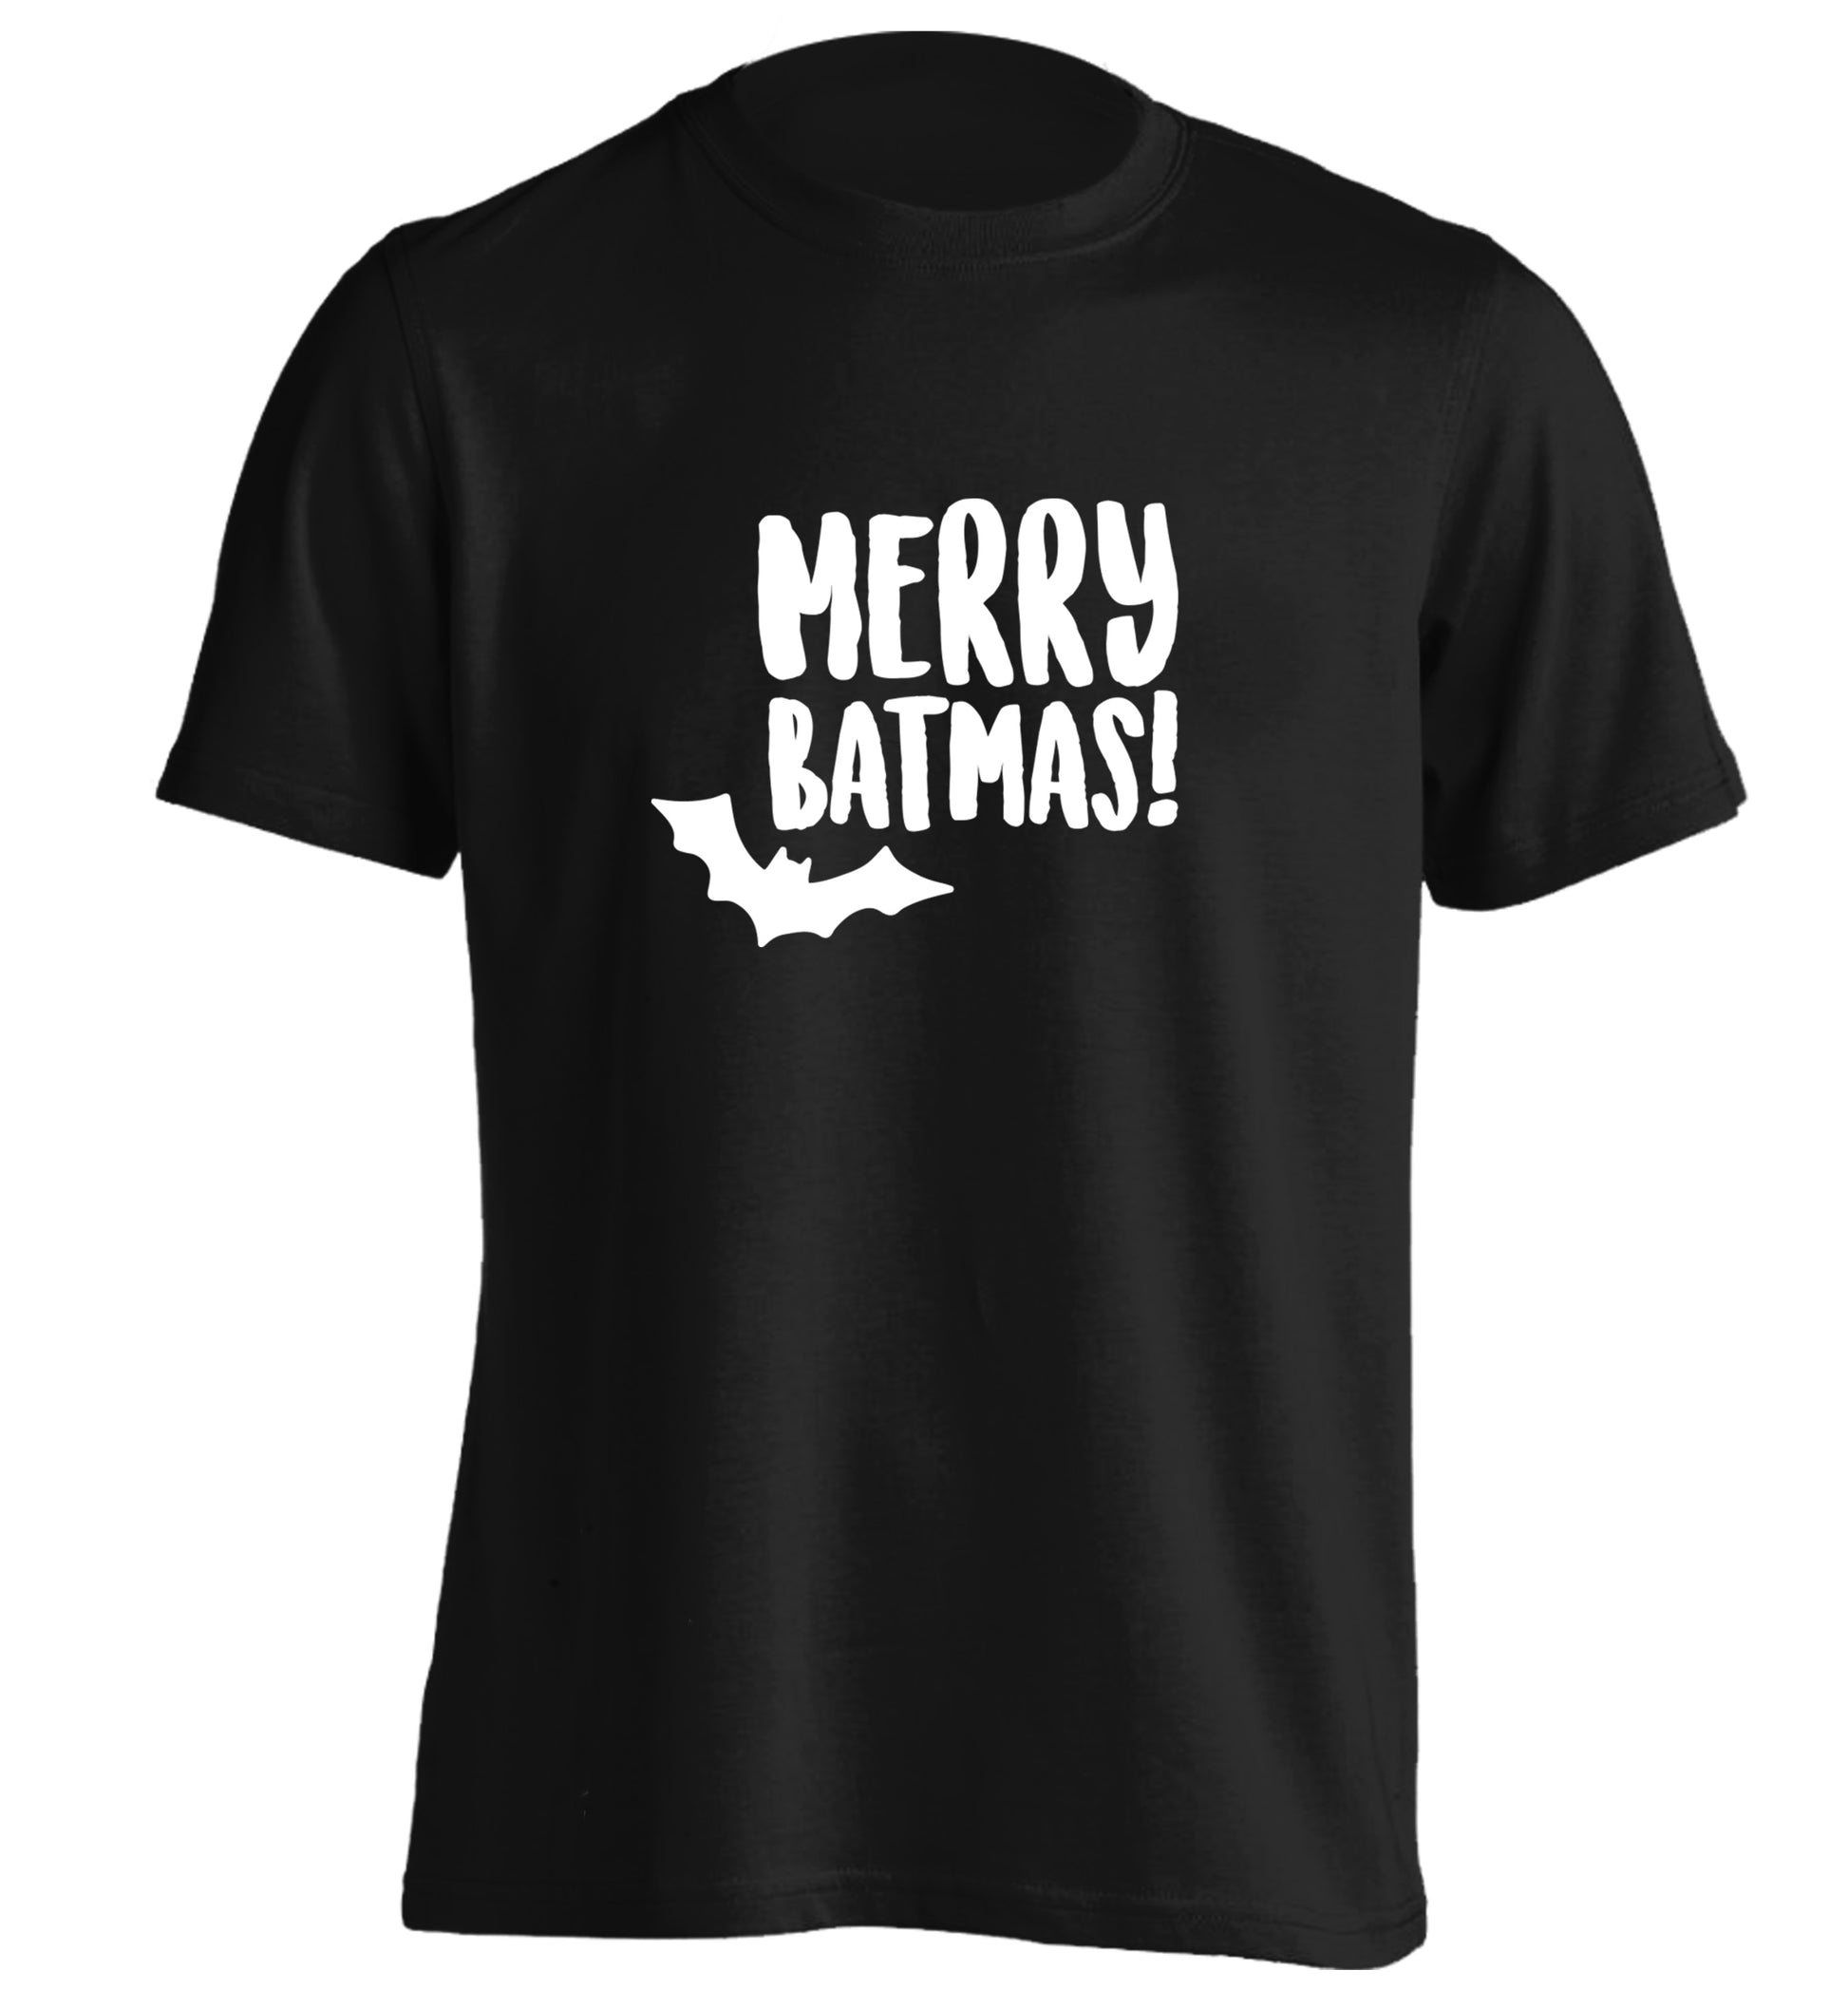 Merry Batmas adults unisex black Tshirt 2XL